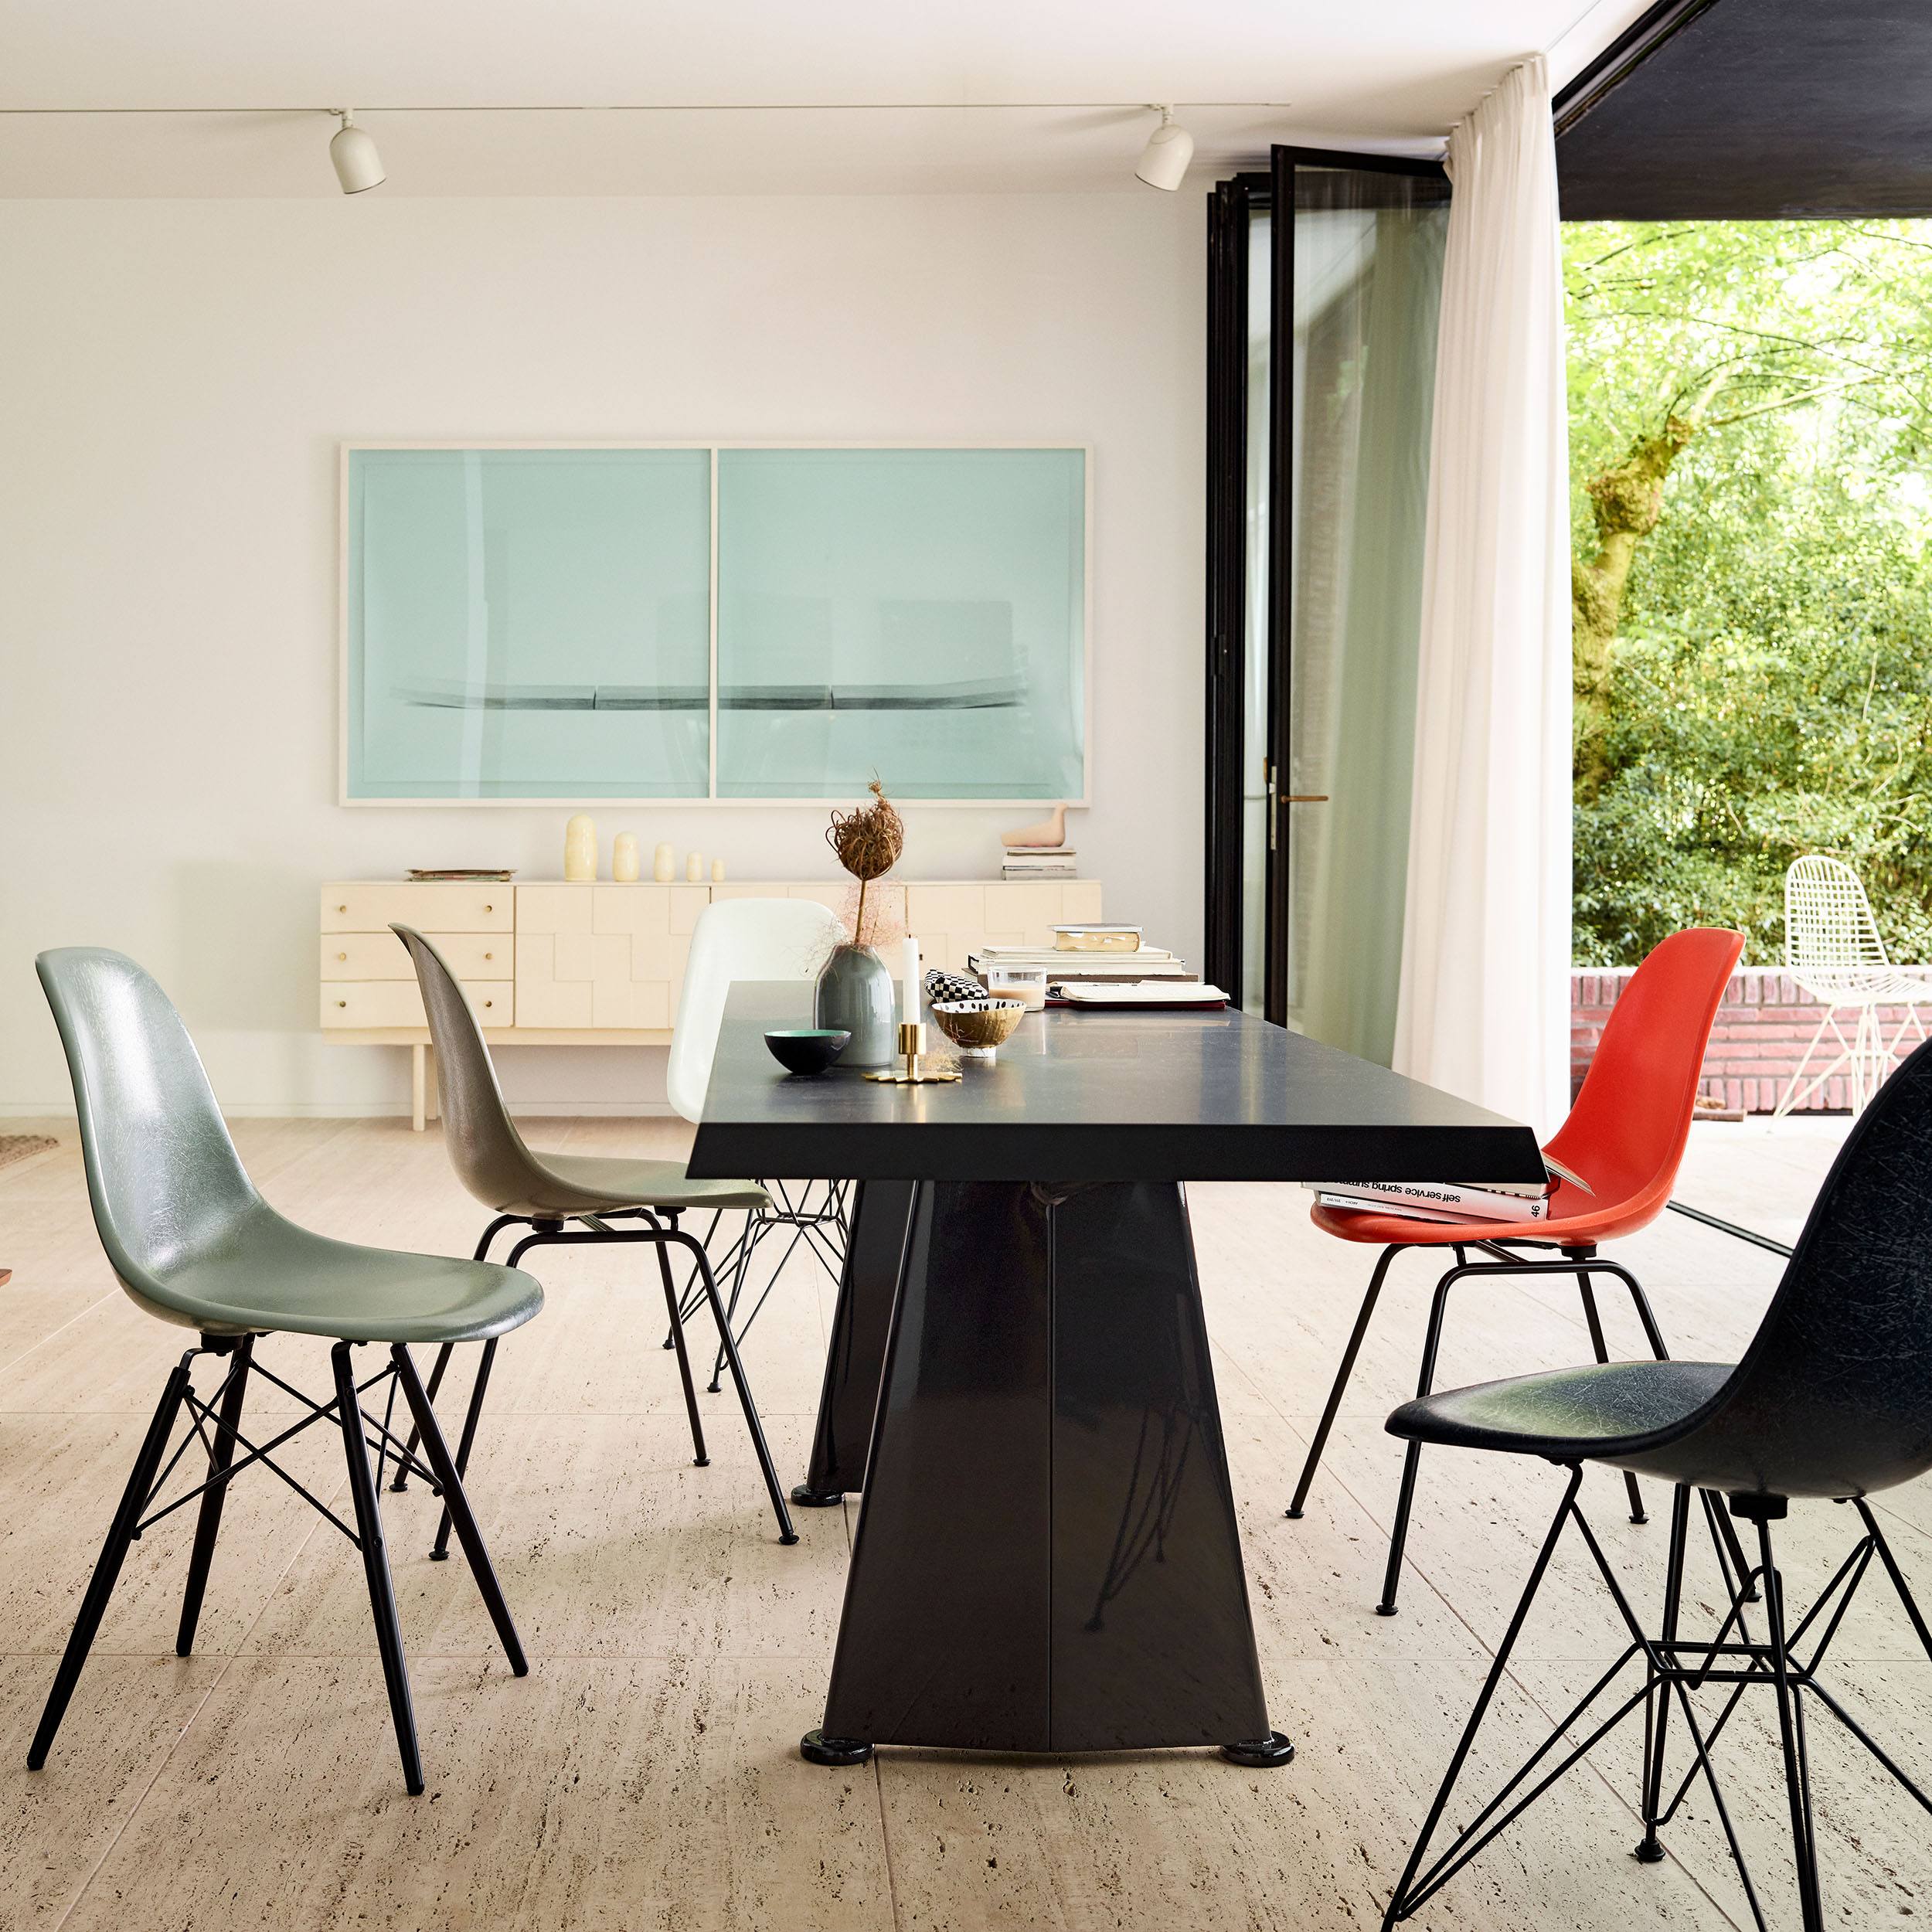 Eames Fiberglass Side Chair Stuhl DSW Kunststoffgleiter